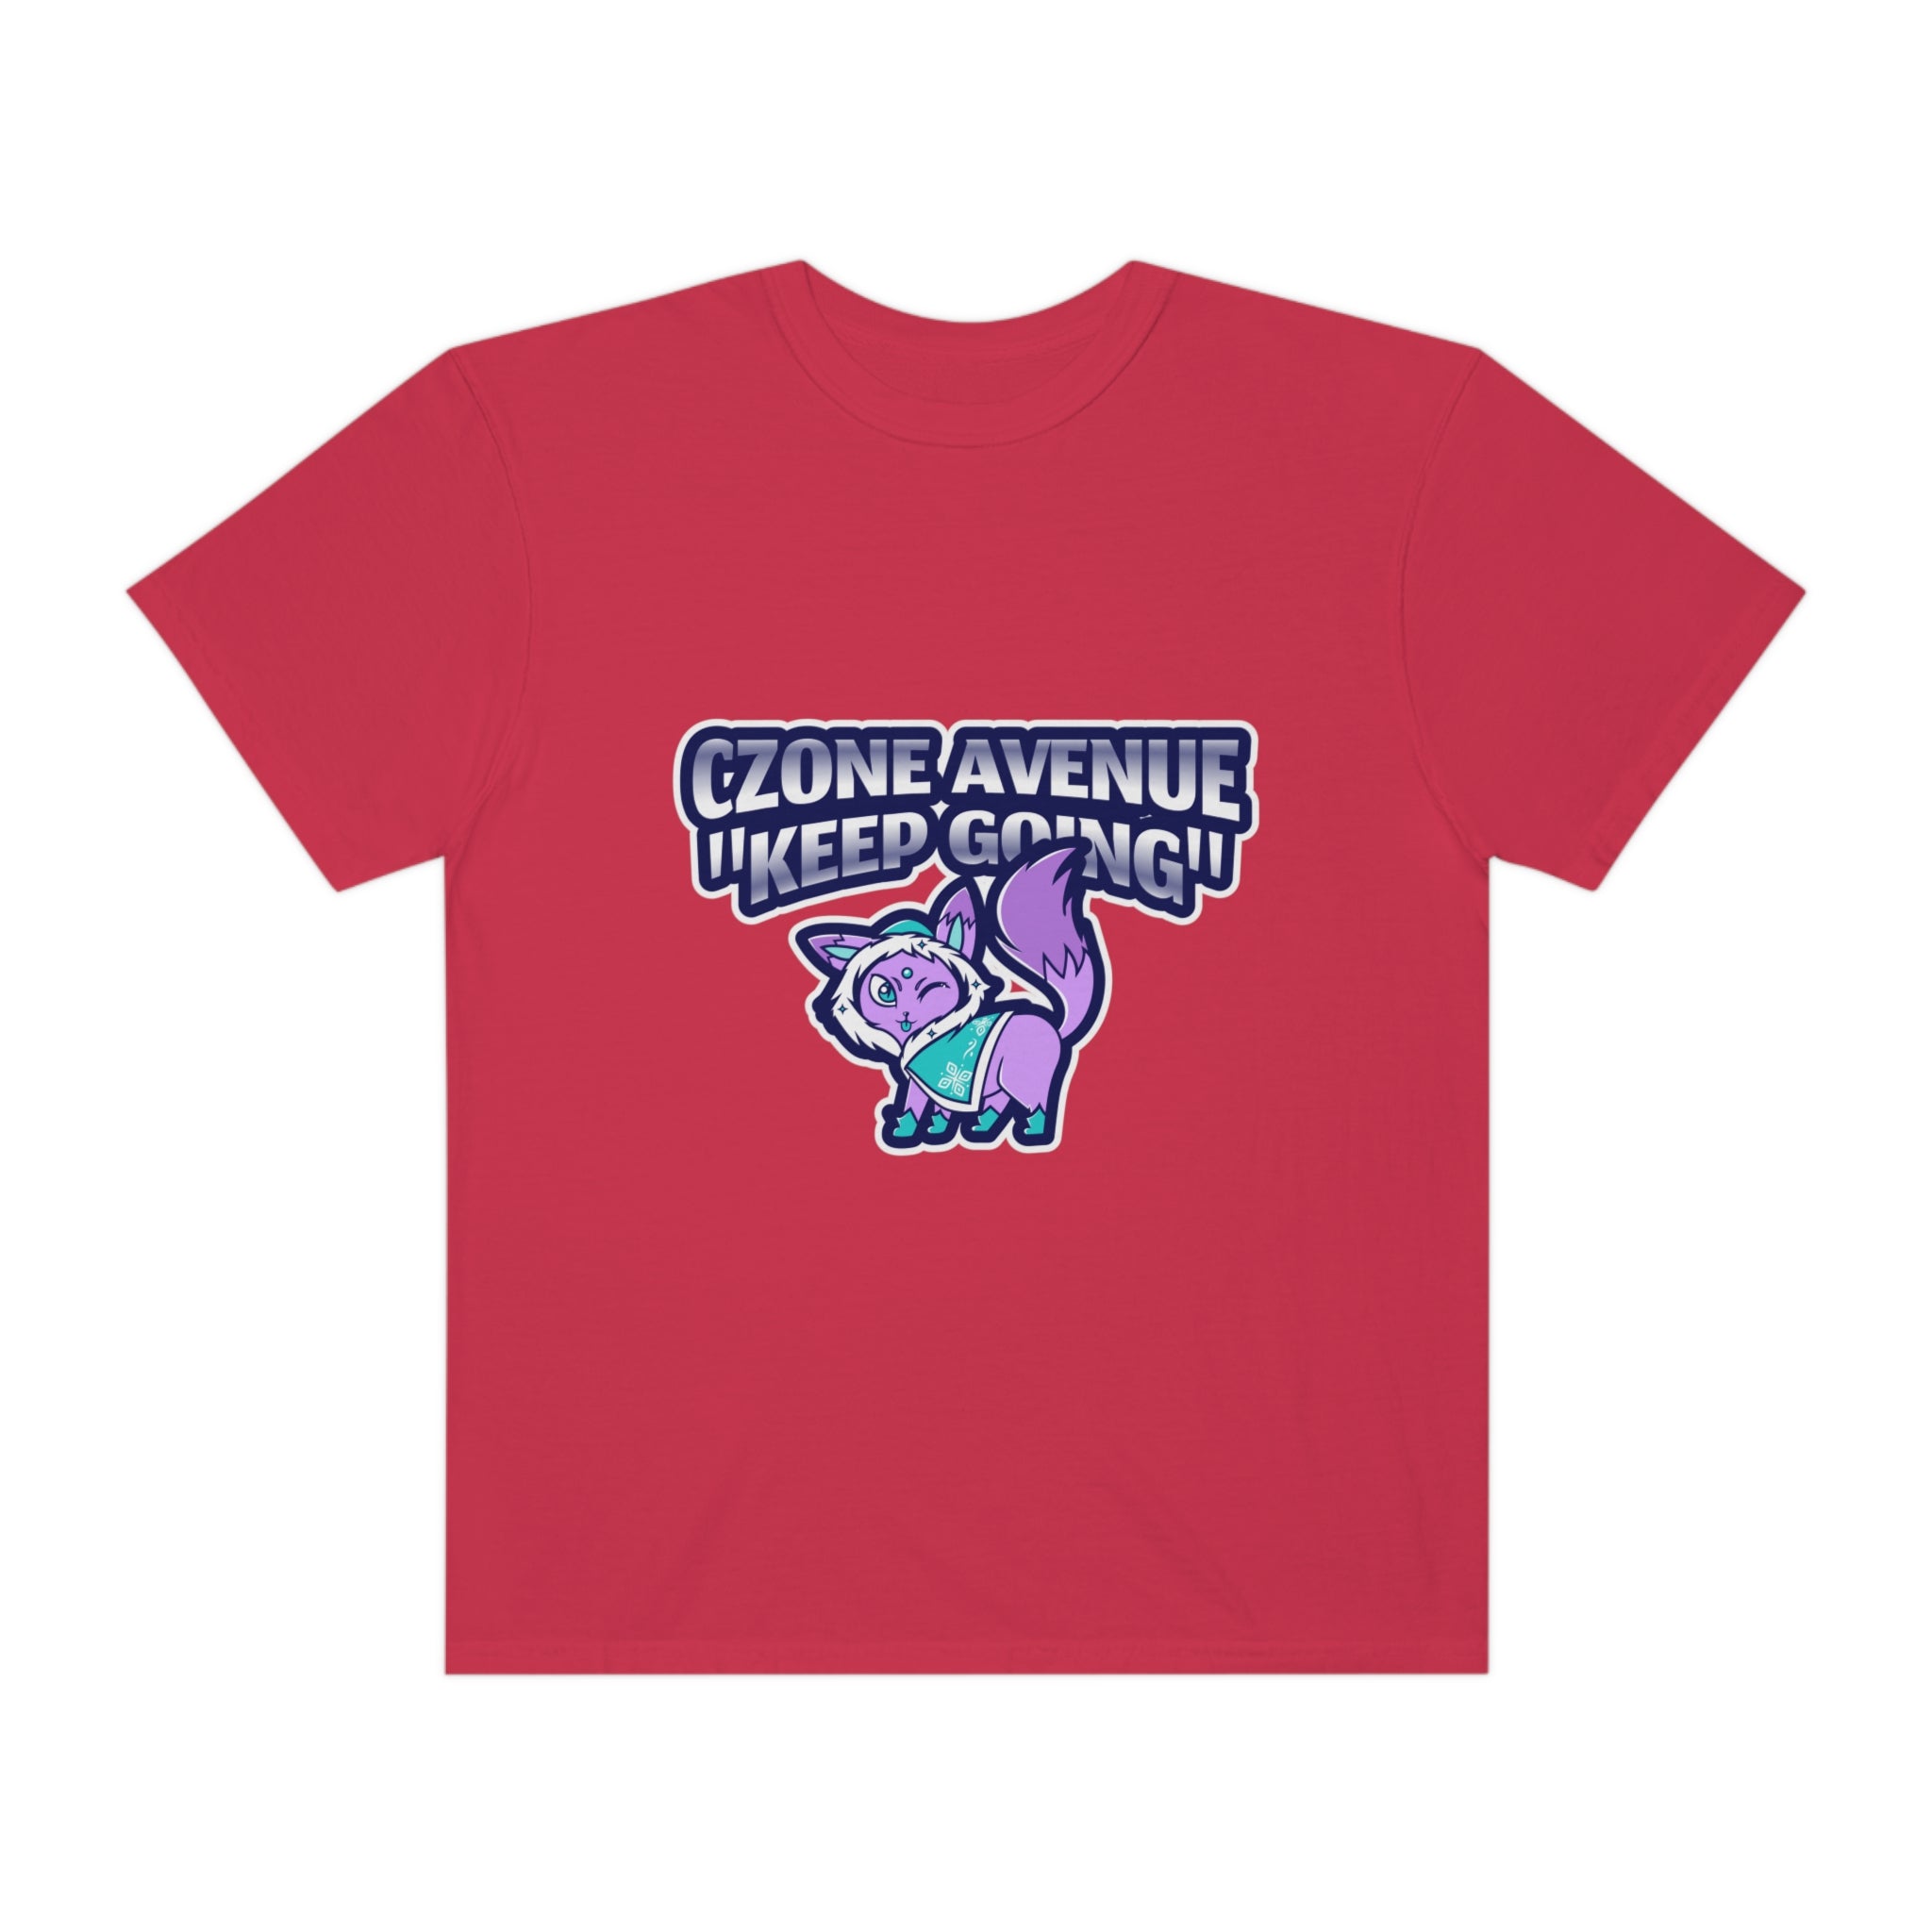 Czone Avenue T-shirt